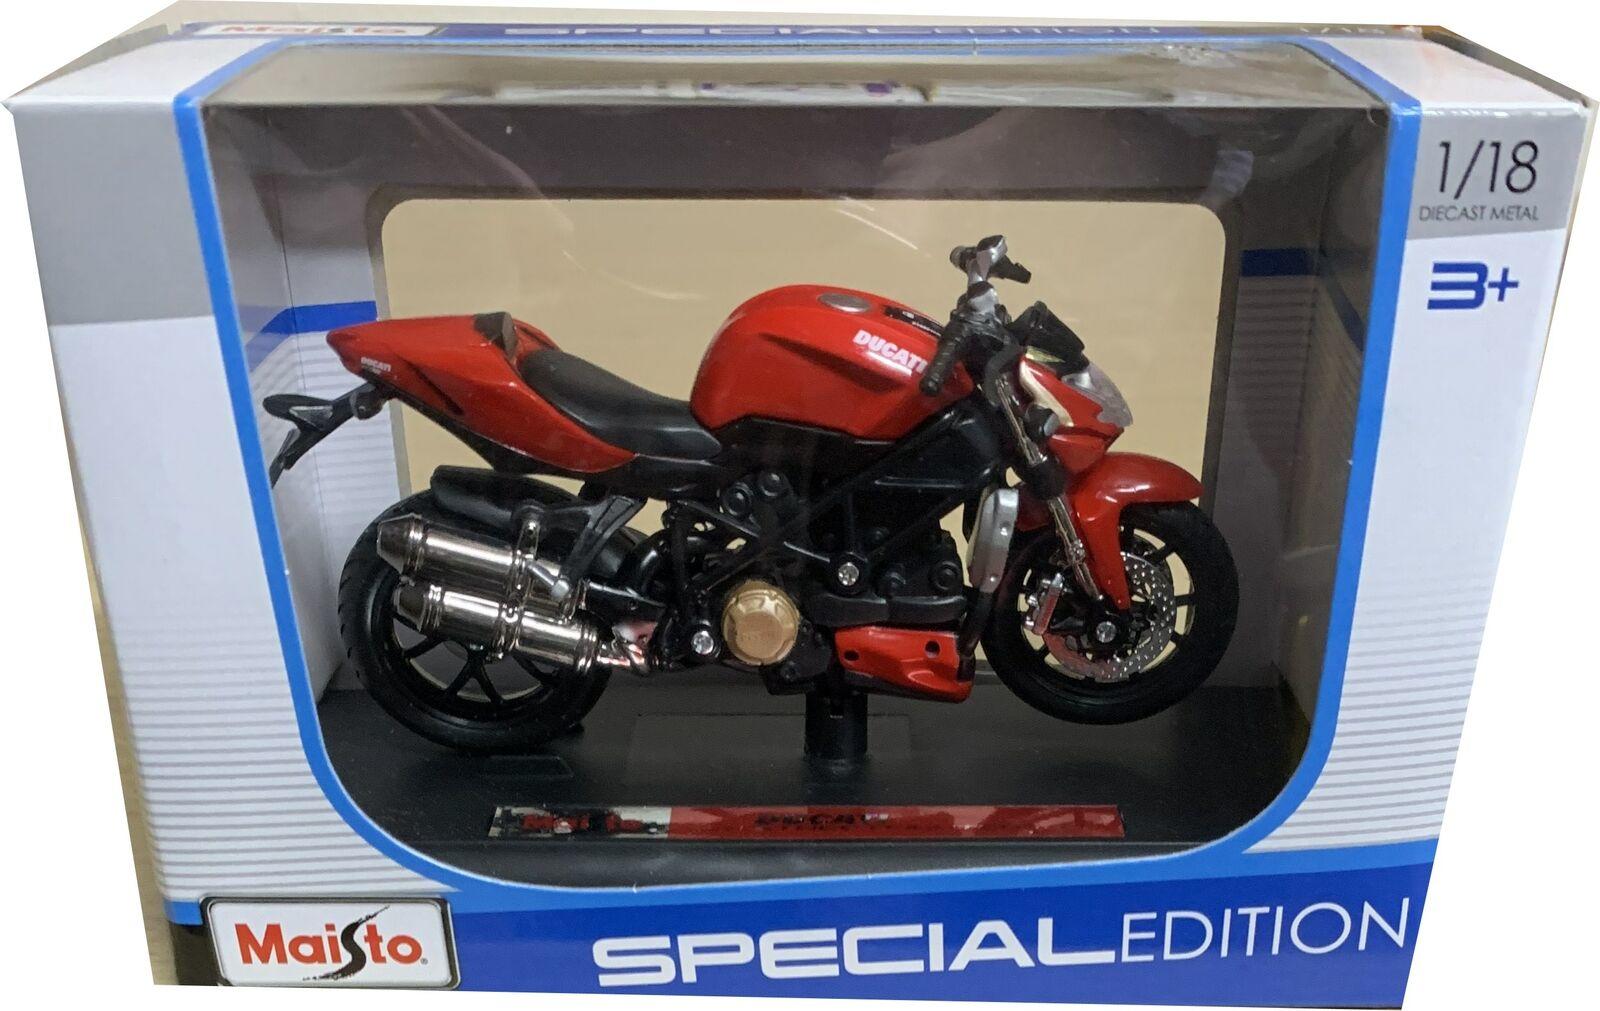 Ducati Mod Streetfighter in red 1:18 scale motorbike model from Maisto